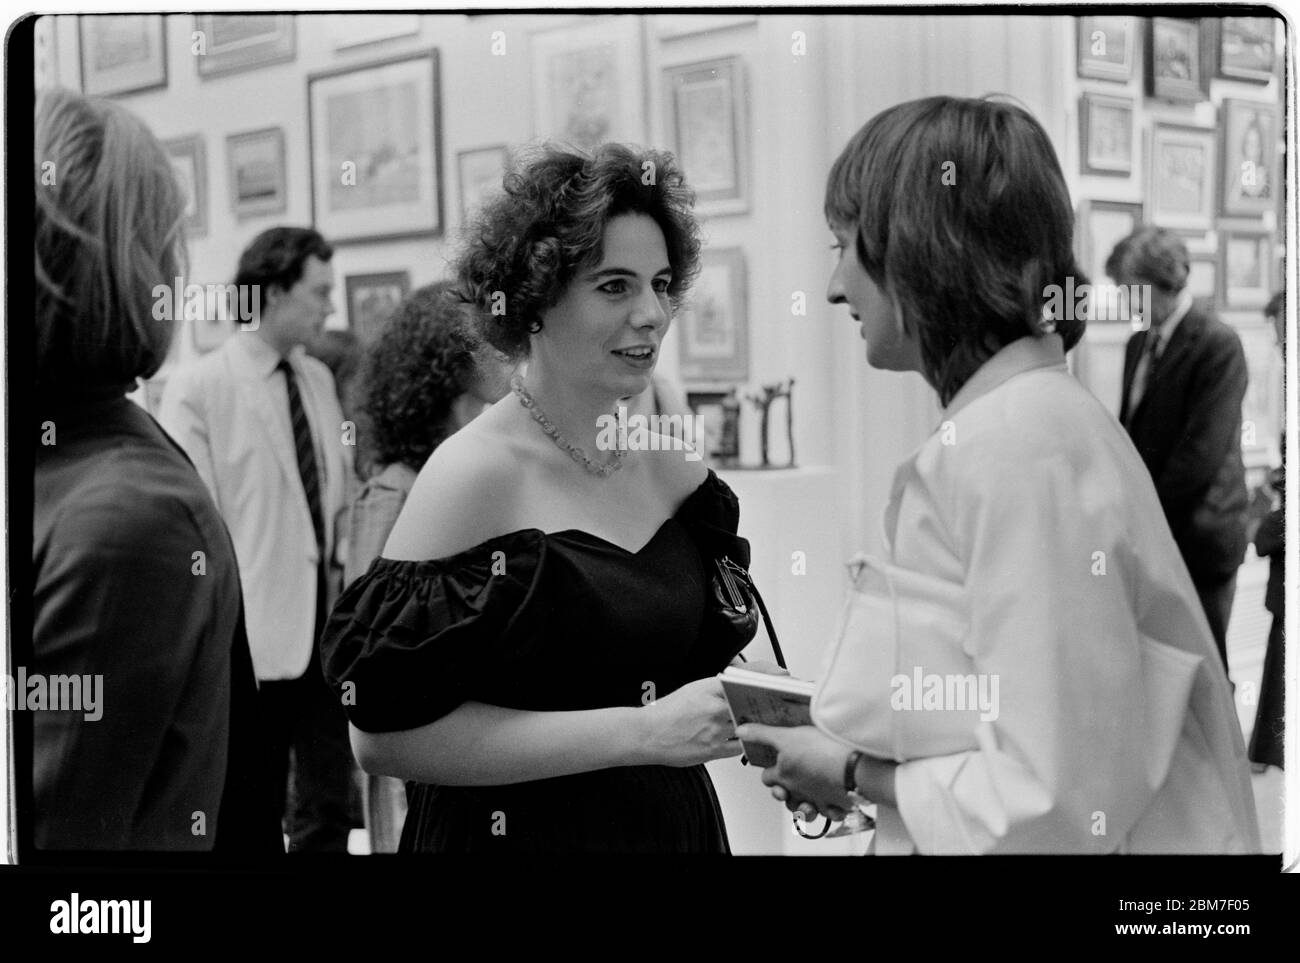 Royal Academy Summer Show Eröffnung Abend 1984, London England Stockfoto